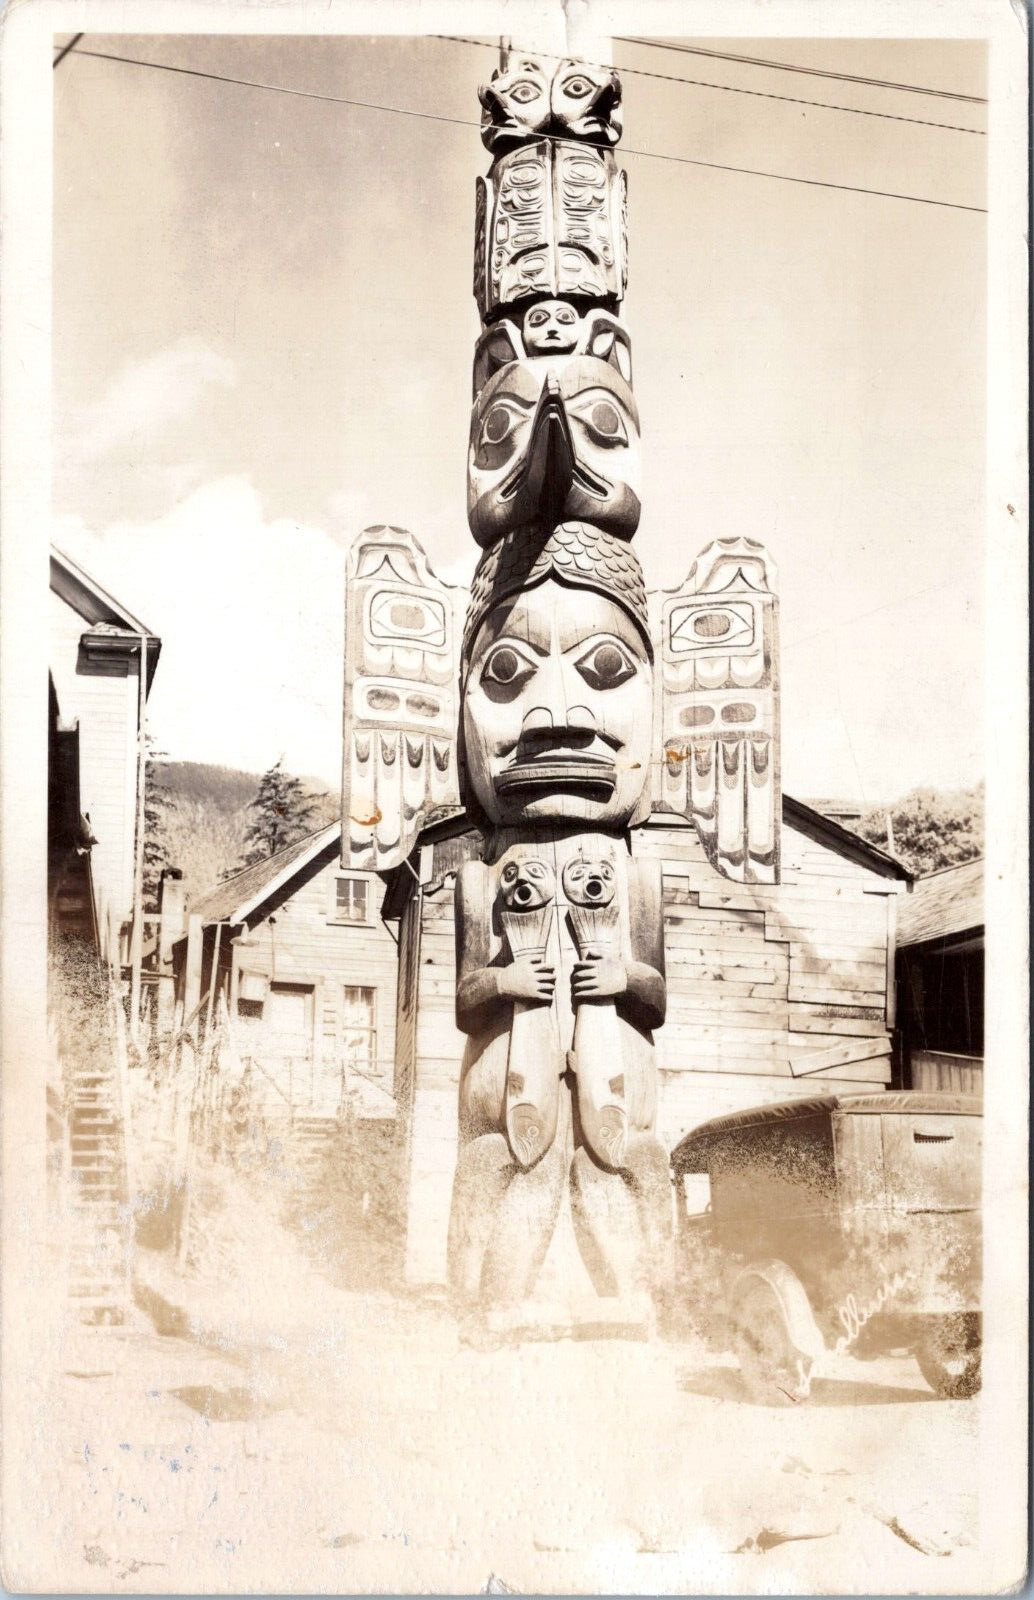 RPPC Chief Johnson Totem Pole, Ketchikan, Alaska - Real Photo Postcard - 1940